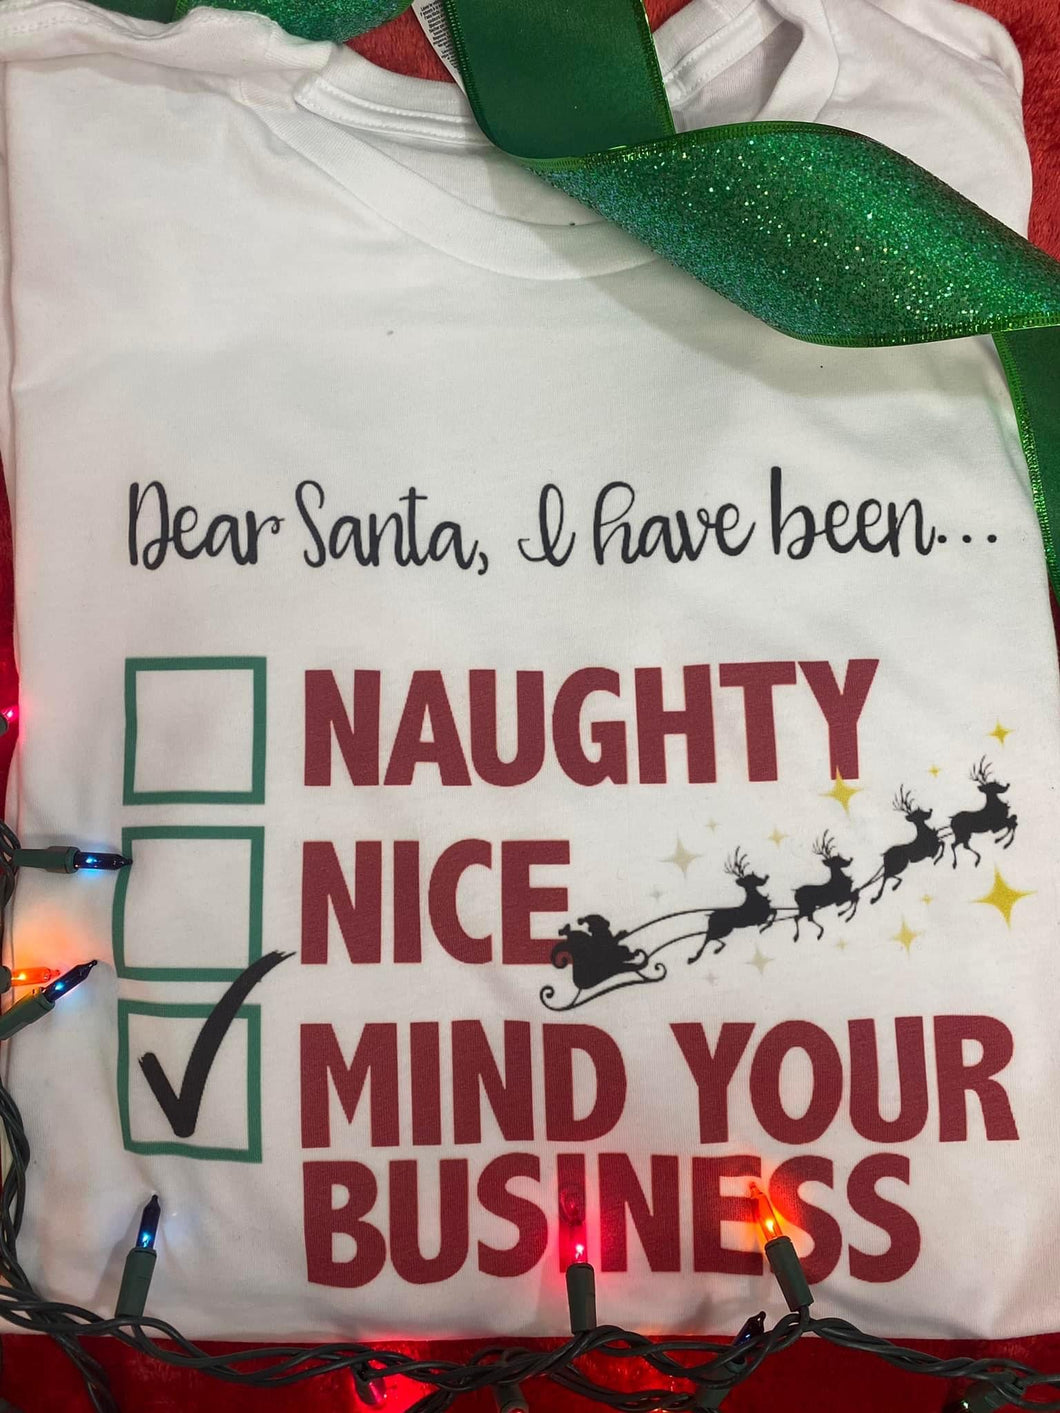 Dear Santa, mind your business apparel